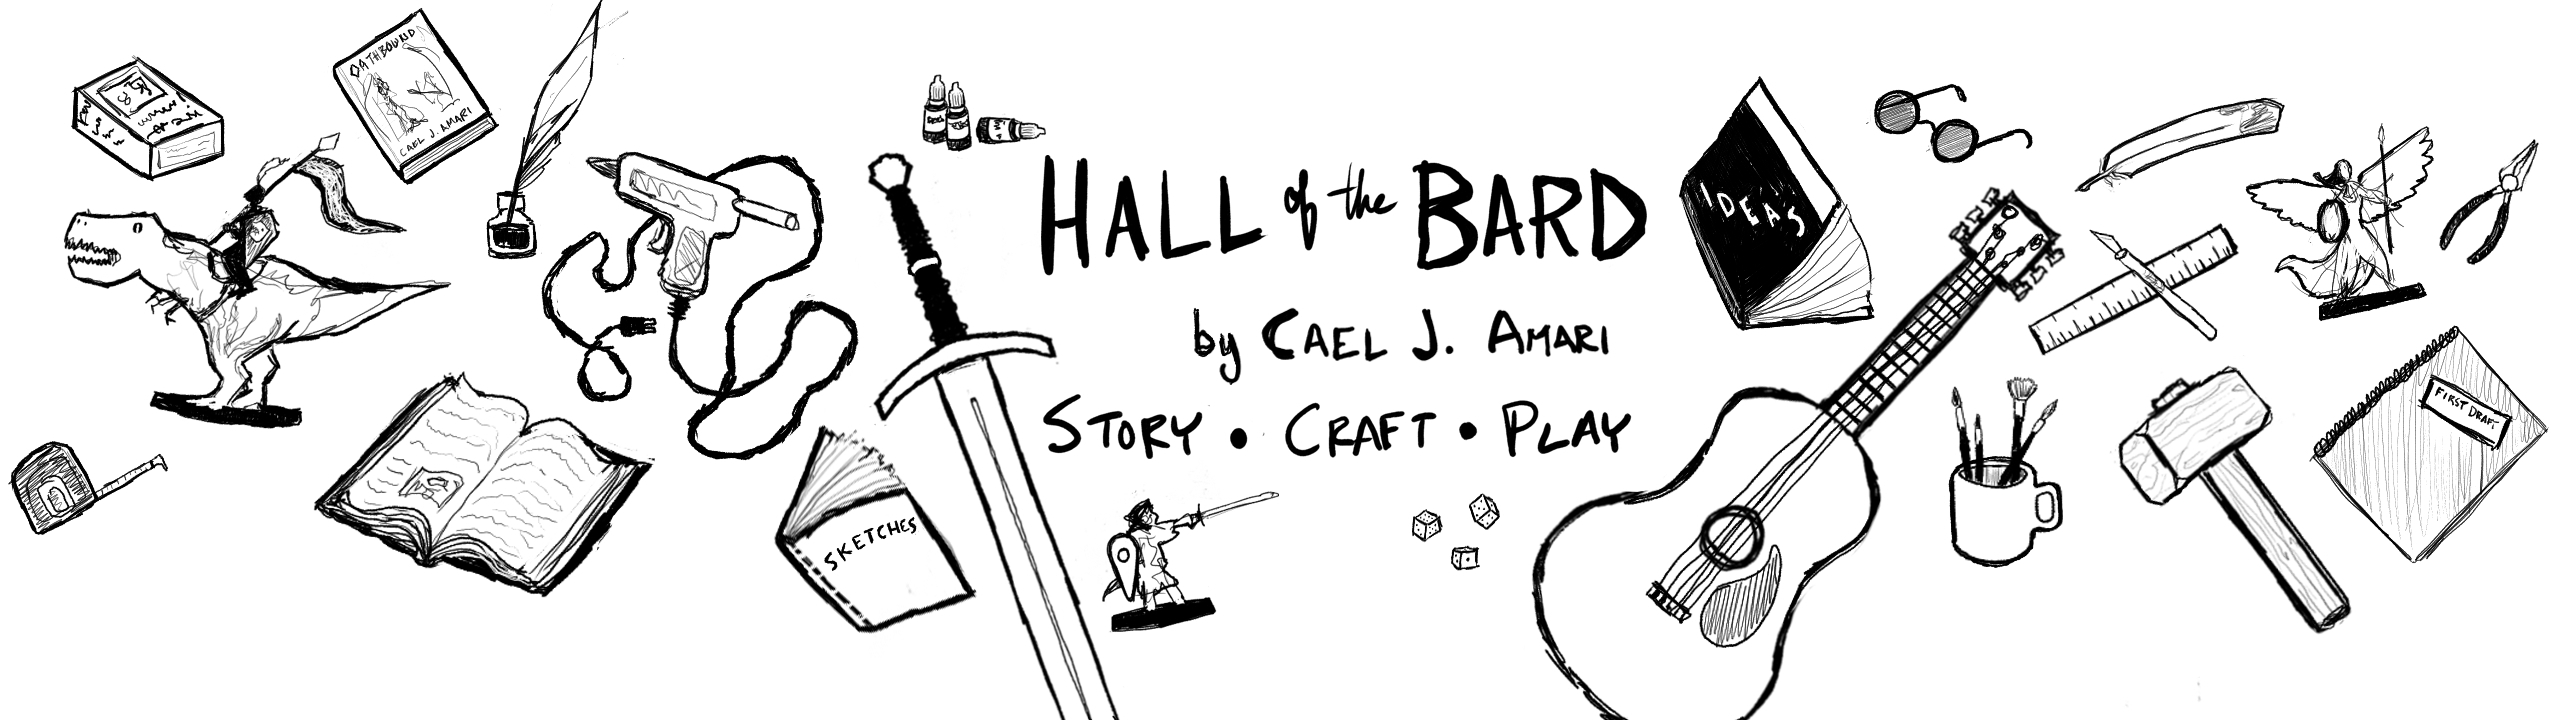 Hall of the Bard